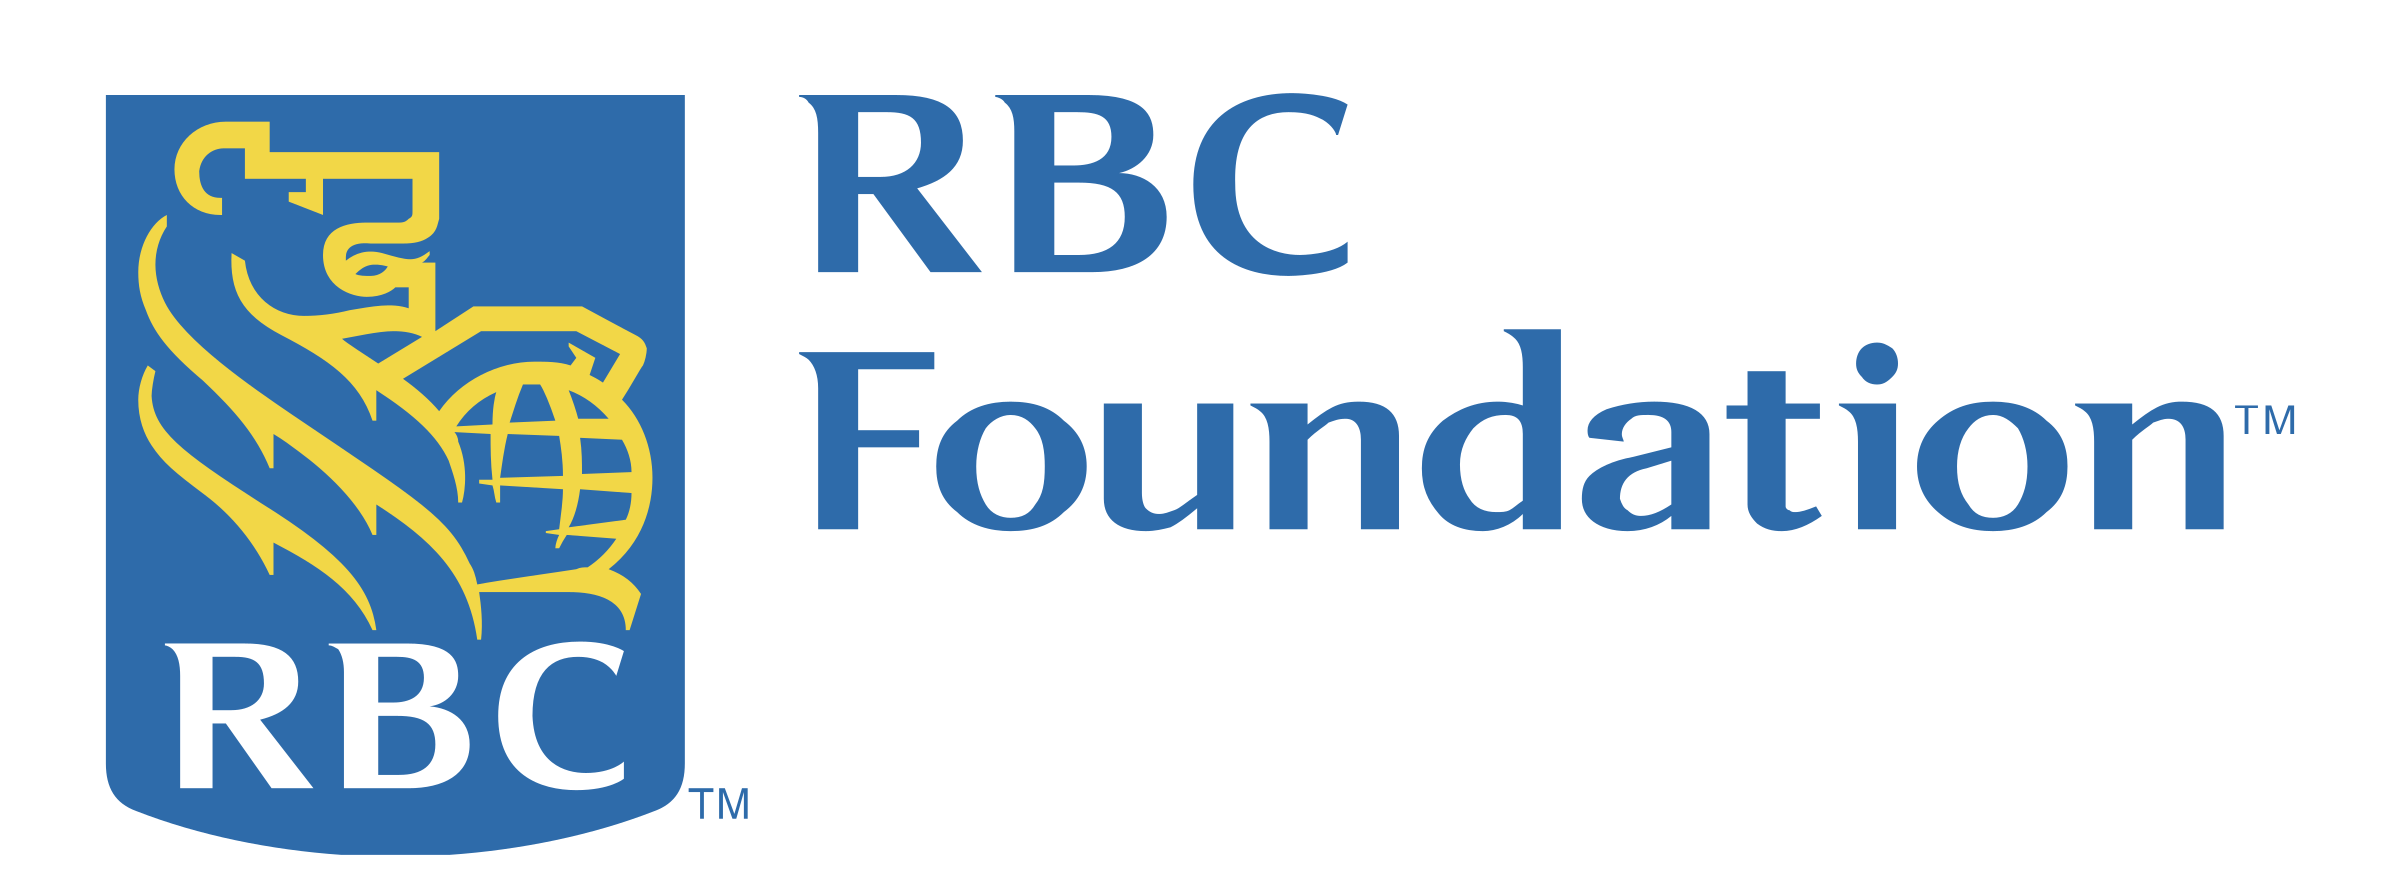 Royal Bank of Canada Foundation logo